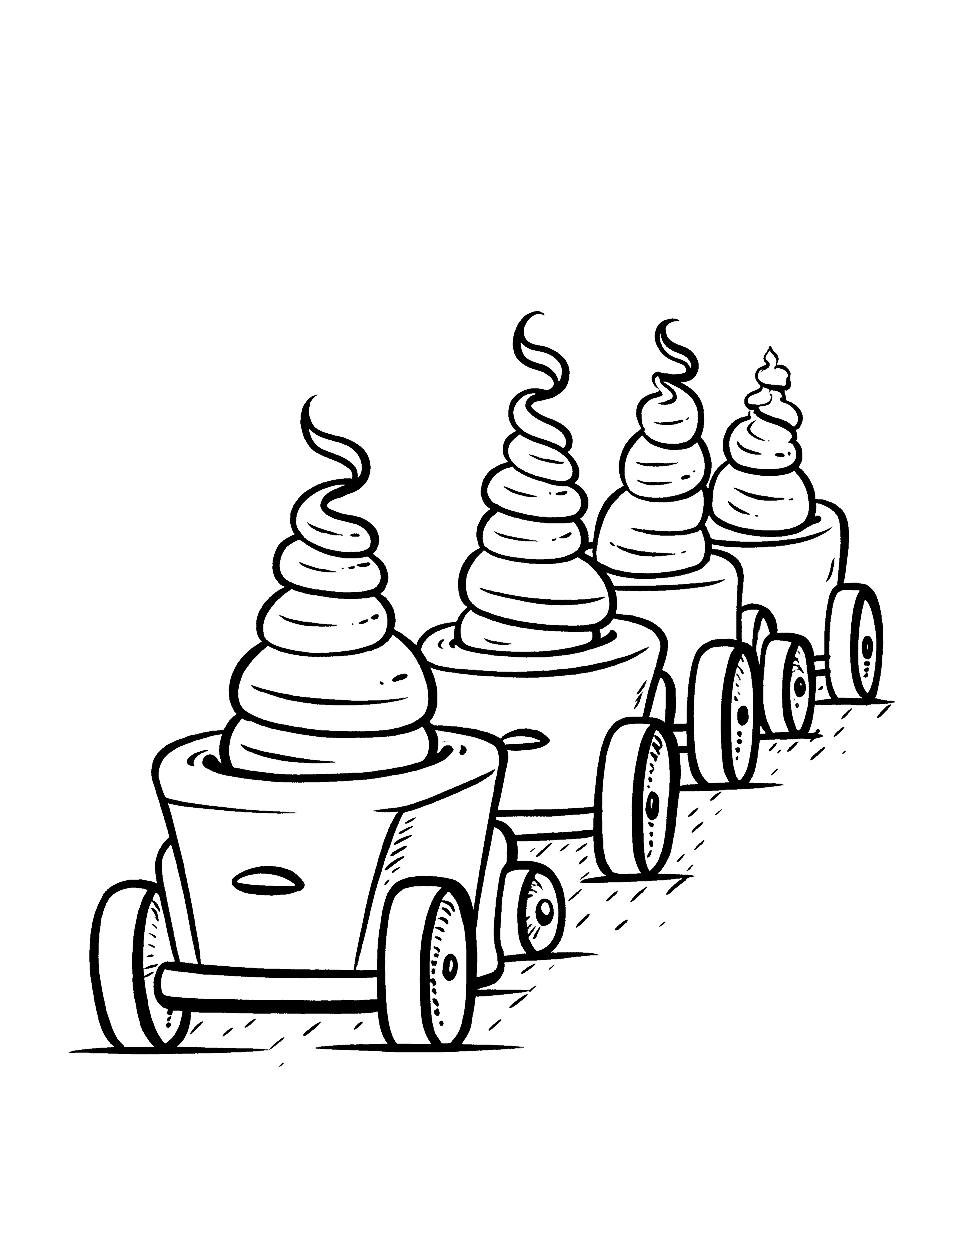 Ice Cream Cars Coloring Page - Cars shaped like ice creams racing.